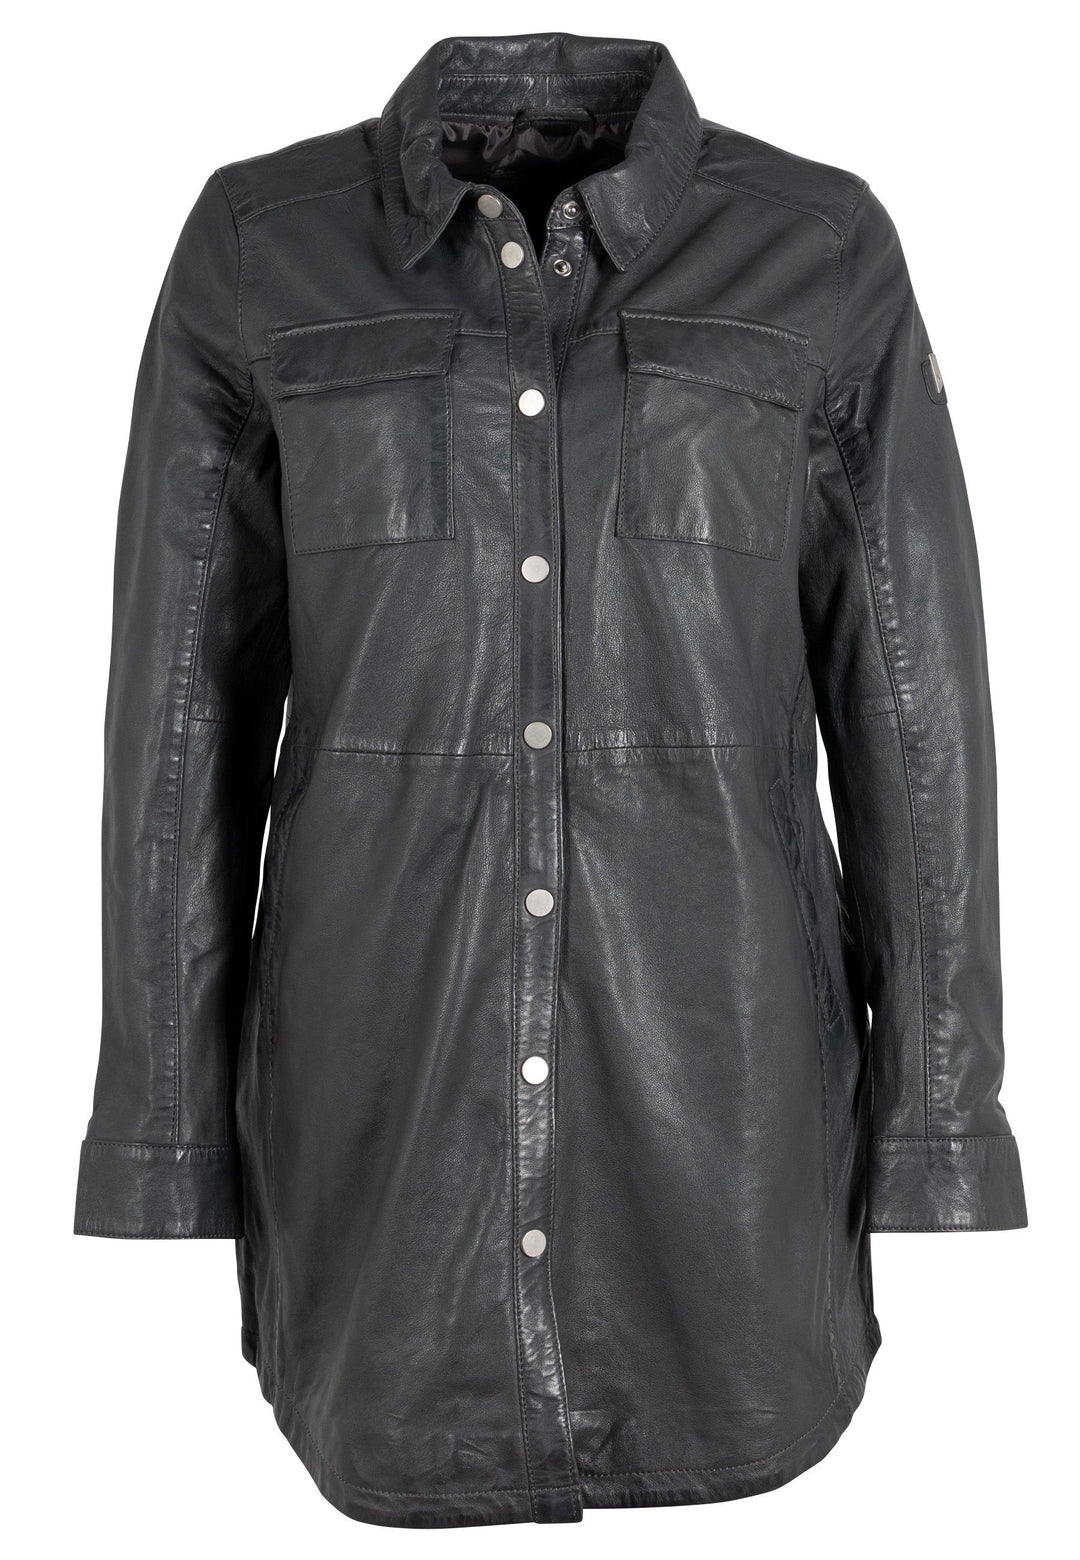 Miha RF Leather Jacket - Anthra Gray